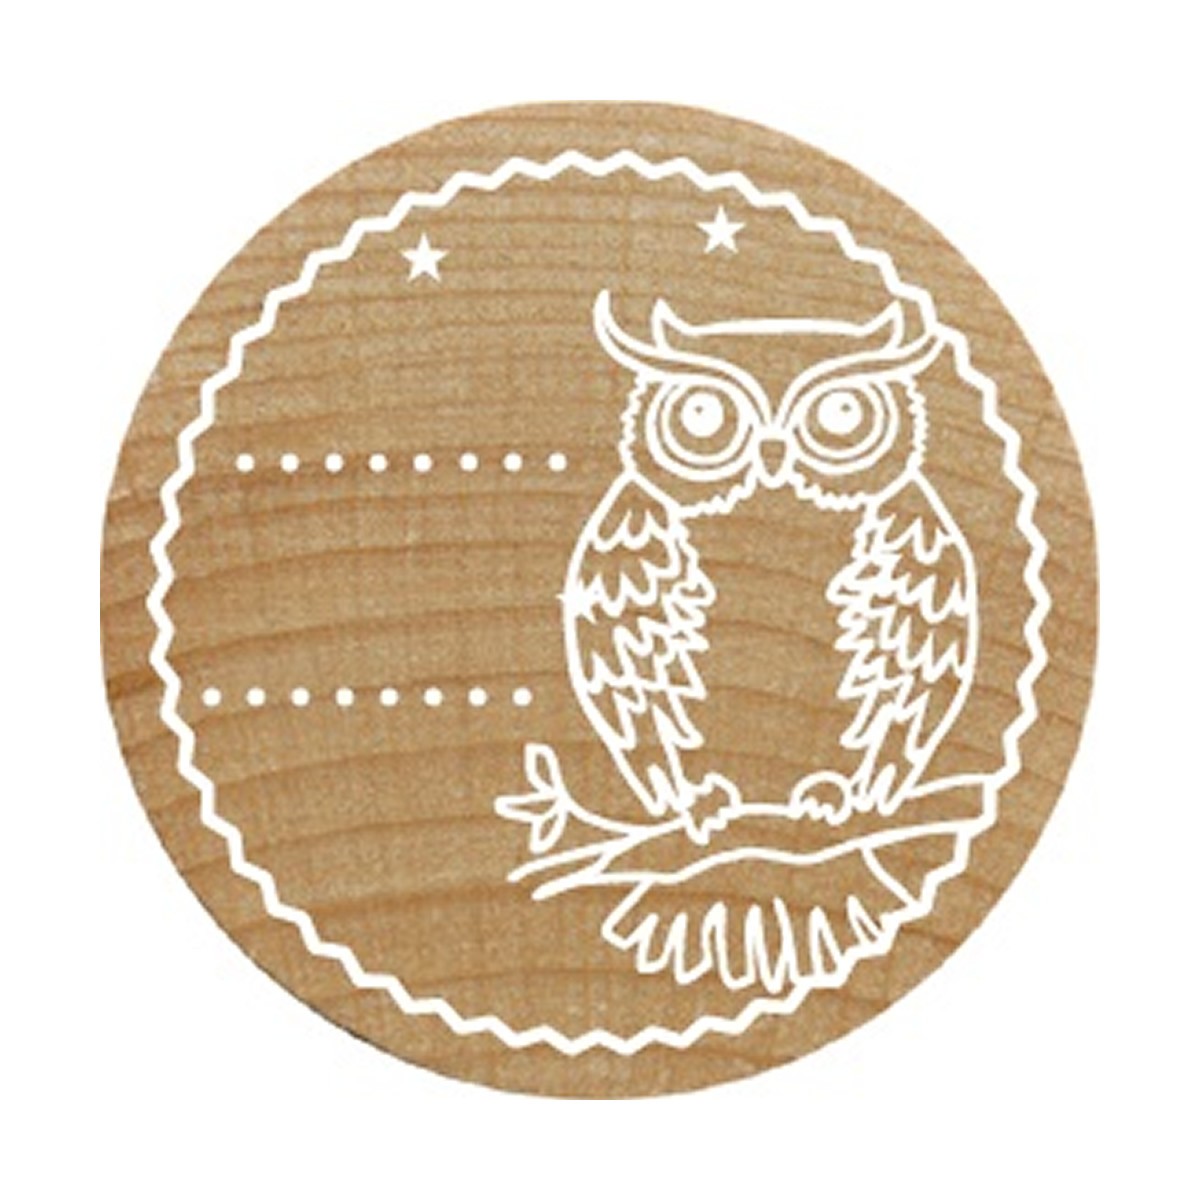 COLOP Arts & Crafts Woodies Ξύλινη Σφραγίδα Owl